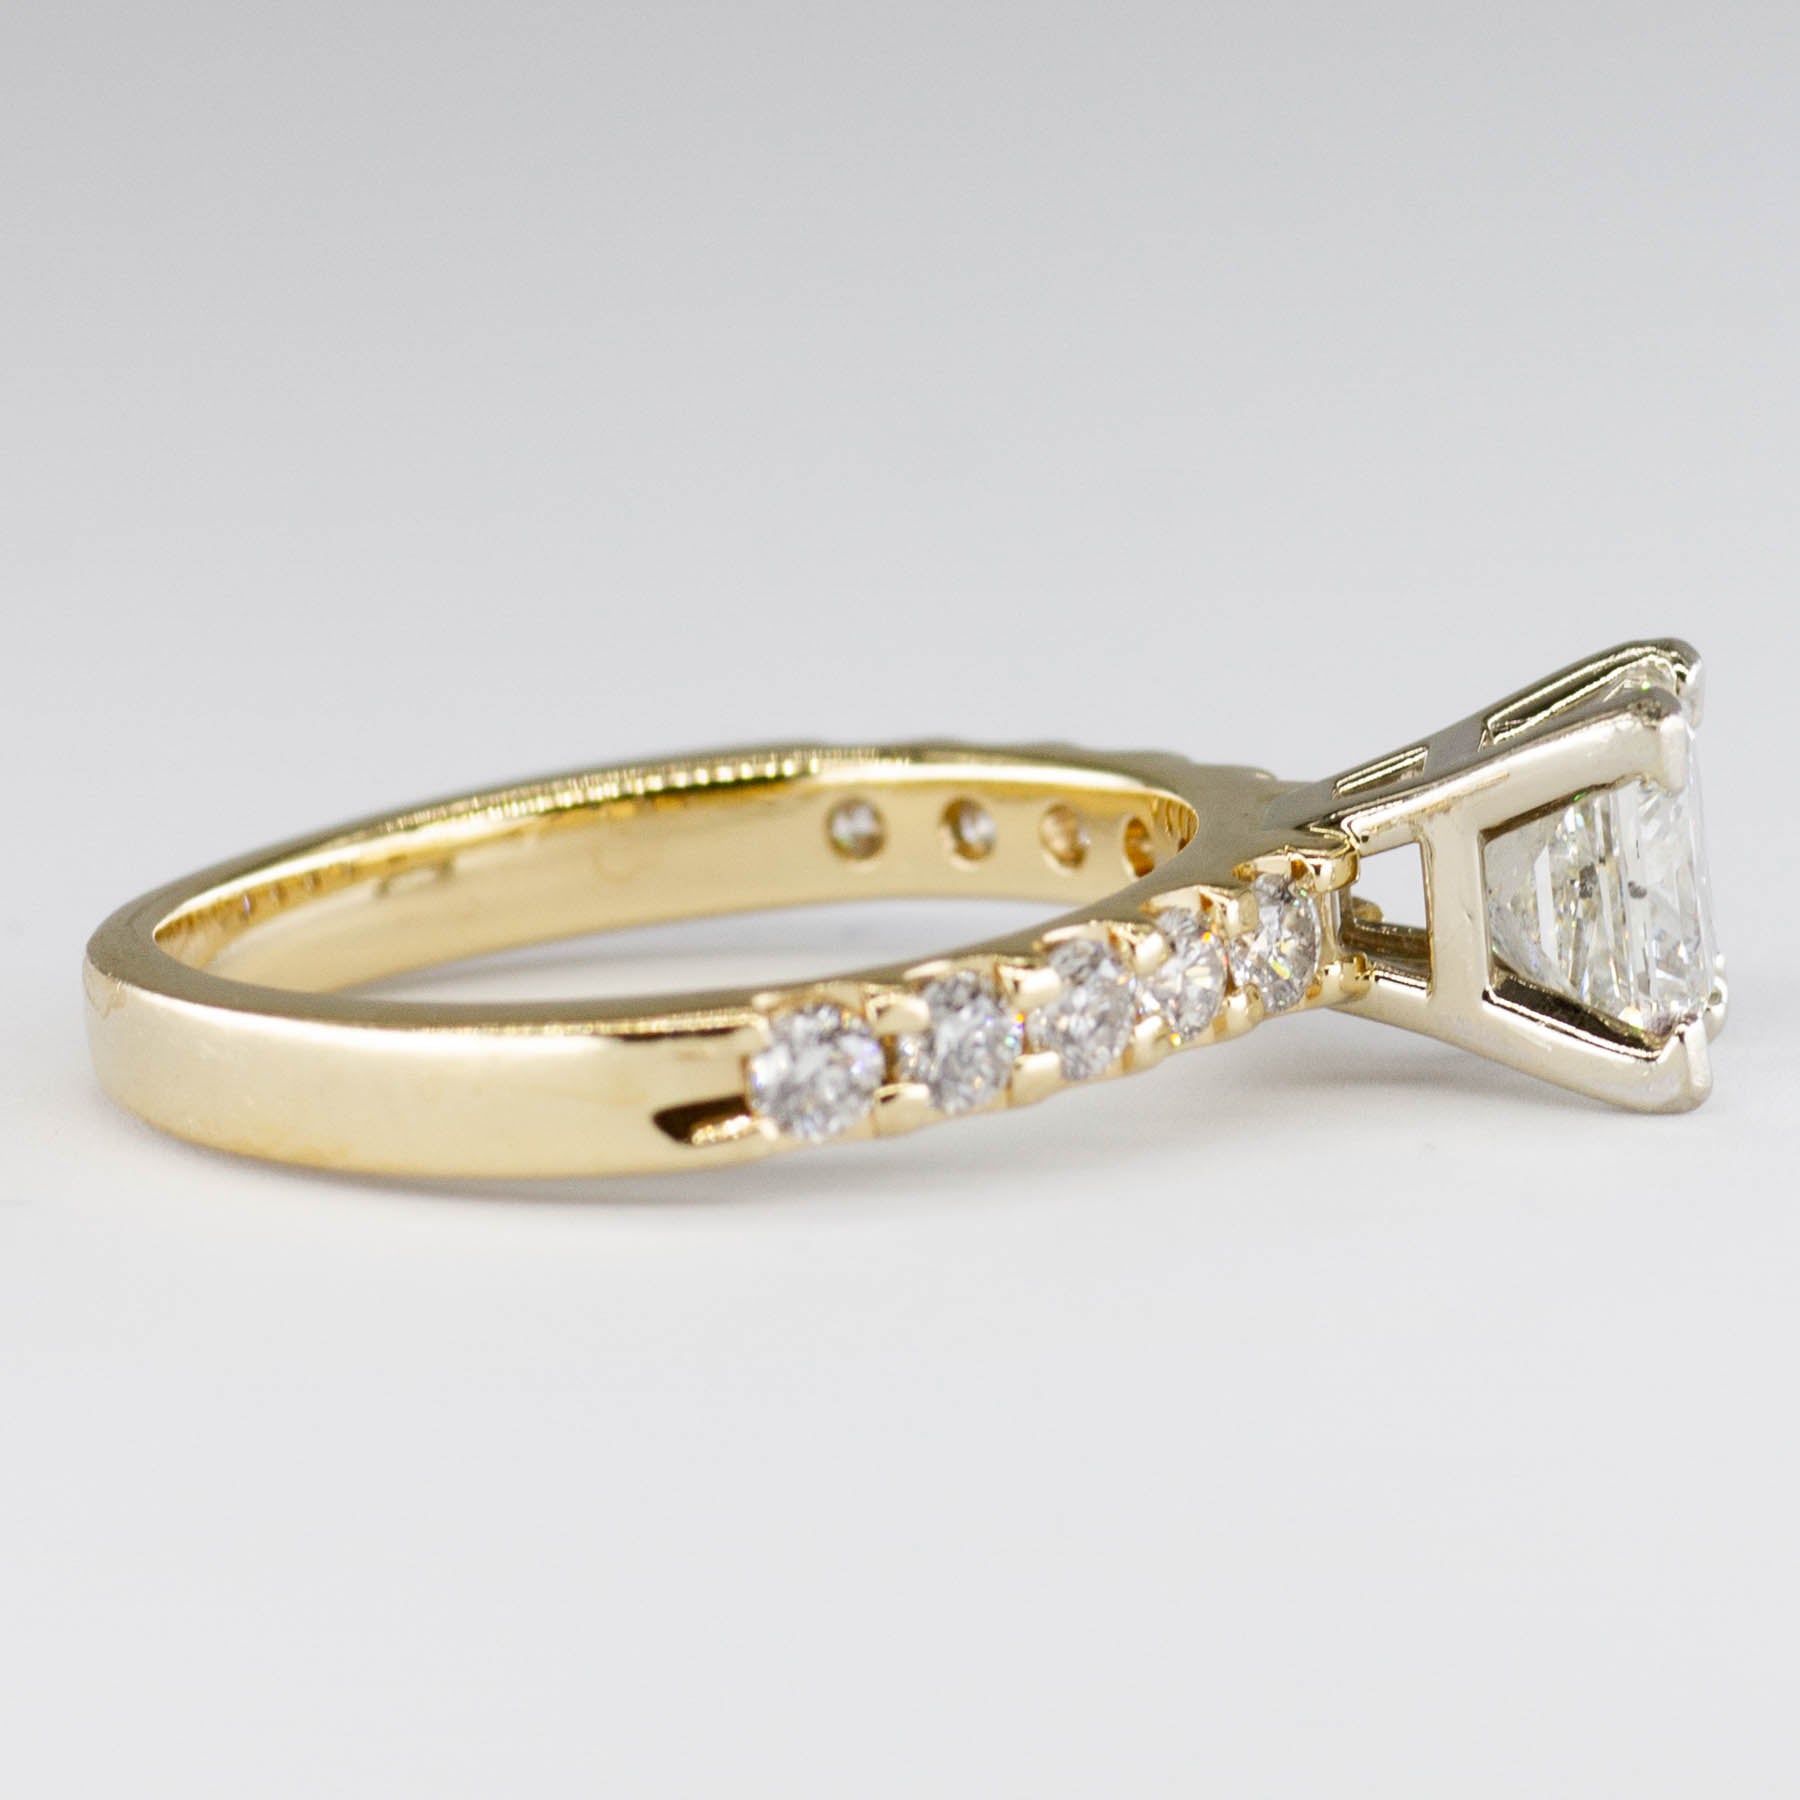 14k Solitaire Princess Cut Diamond Engagement Ring with Accents | 1.49ctw | SZ 5.75 |